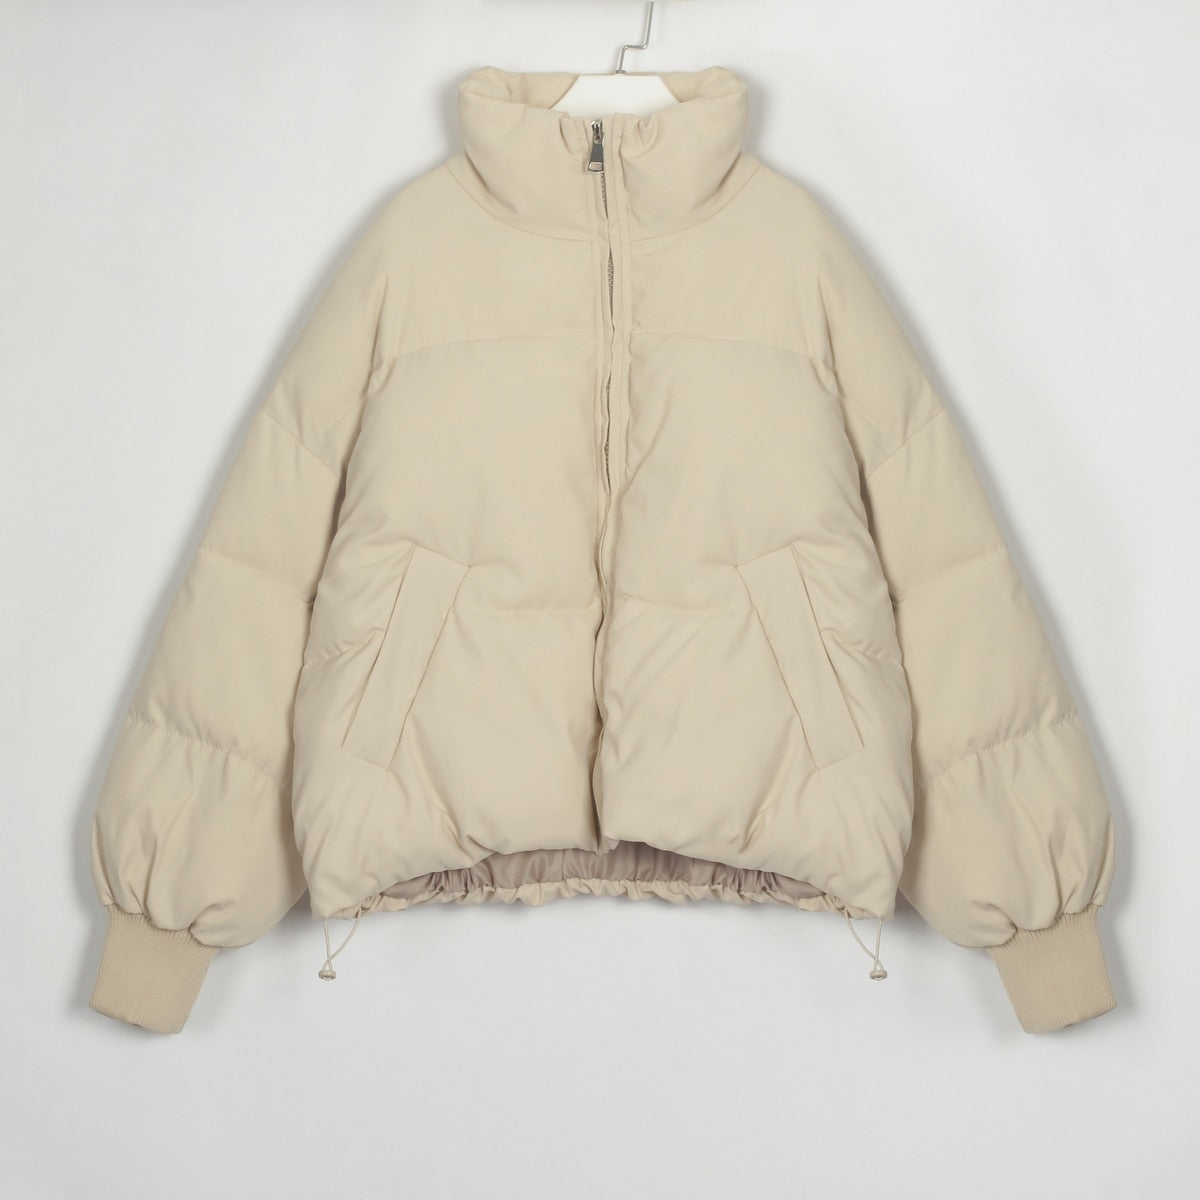 Women Thick Winter Parkas Casual Warm Cotton Jackets Coat Female Classic Zipper Outwear Autumn Street Wear